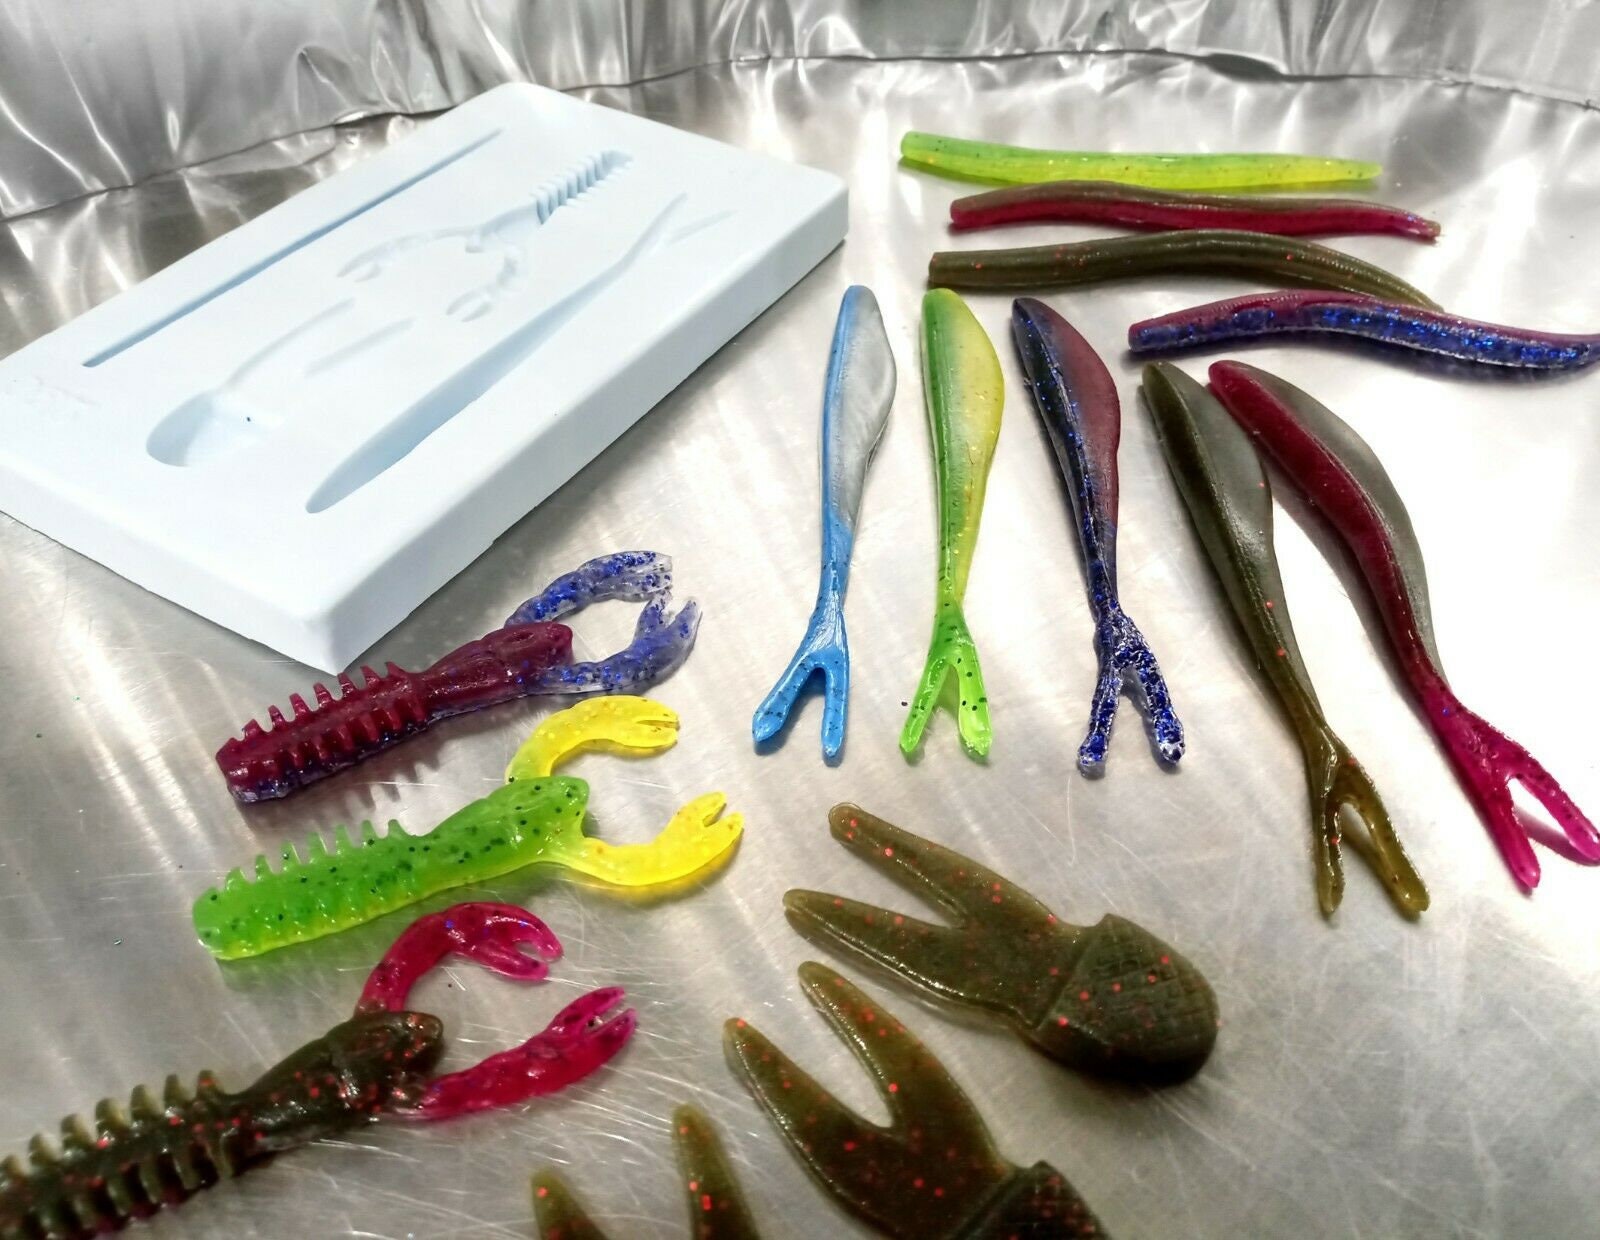 NEW Liquid Plastic SUPER STARTER Set Craw Mold Kit Oil/bags Plastisol  Fishing Lure Bait Making, Easy to Learn & Fun 